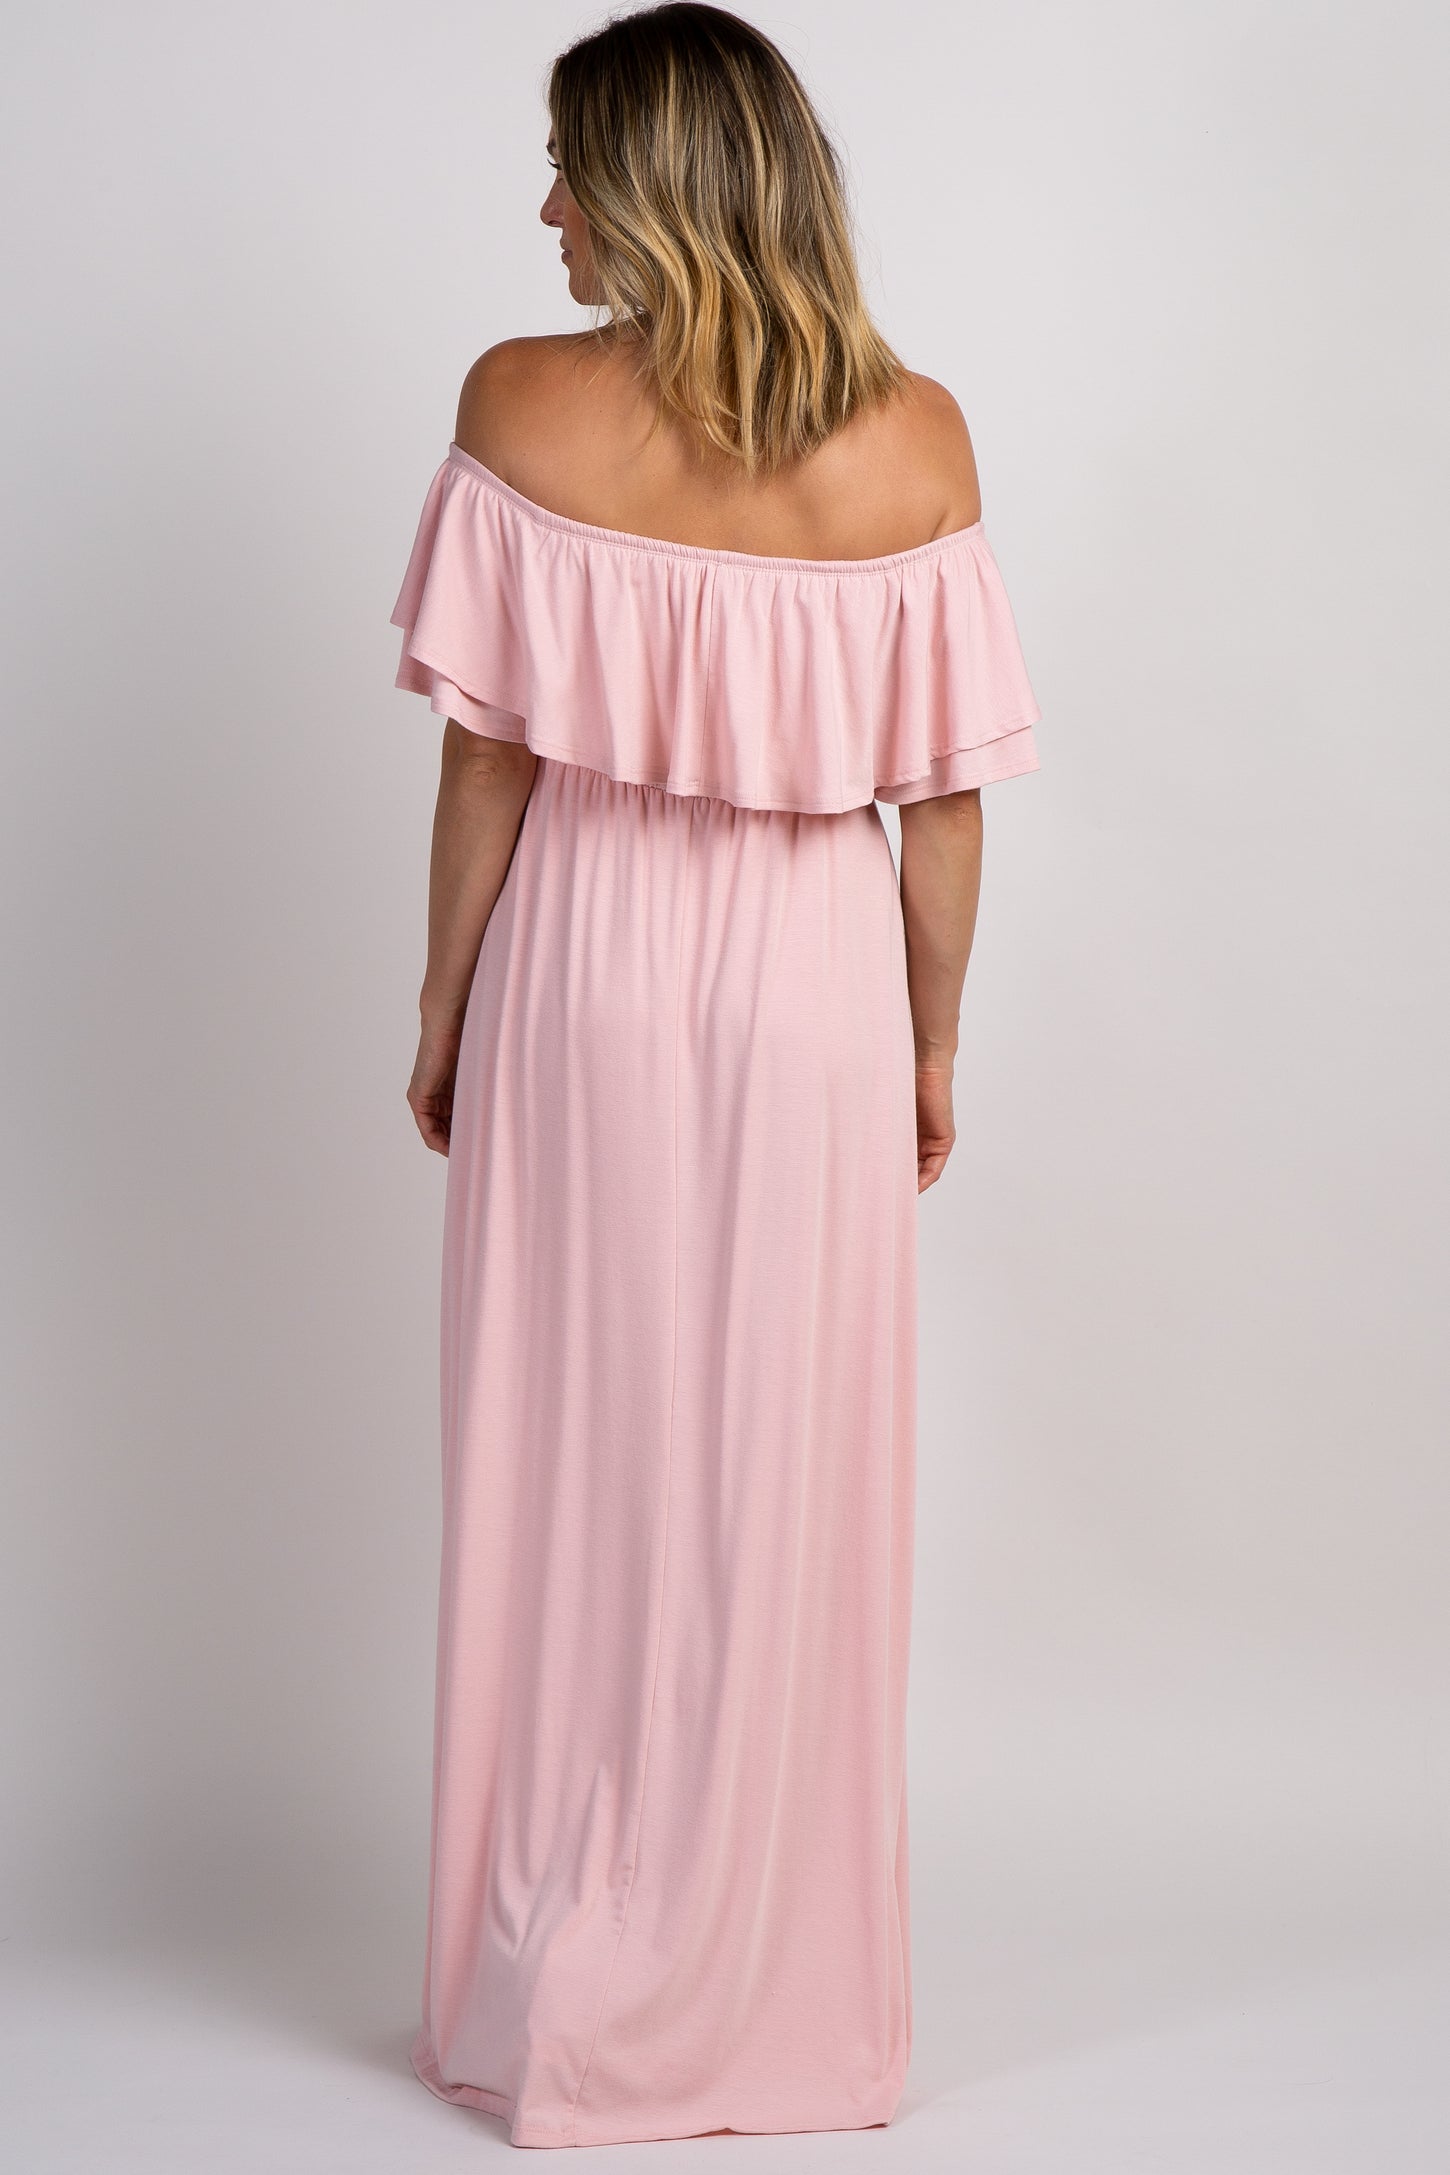 PinkBlush Light Pink Off Shoulder Ruffle Trim Maxi Dress